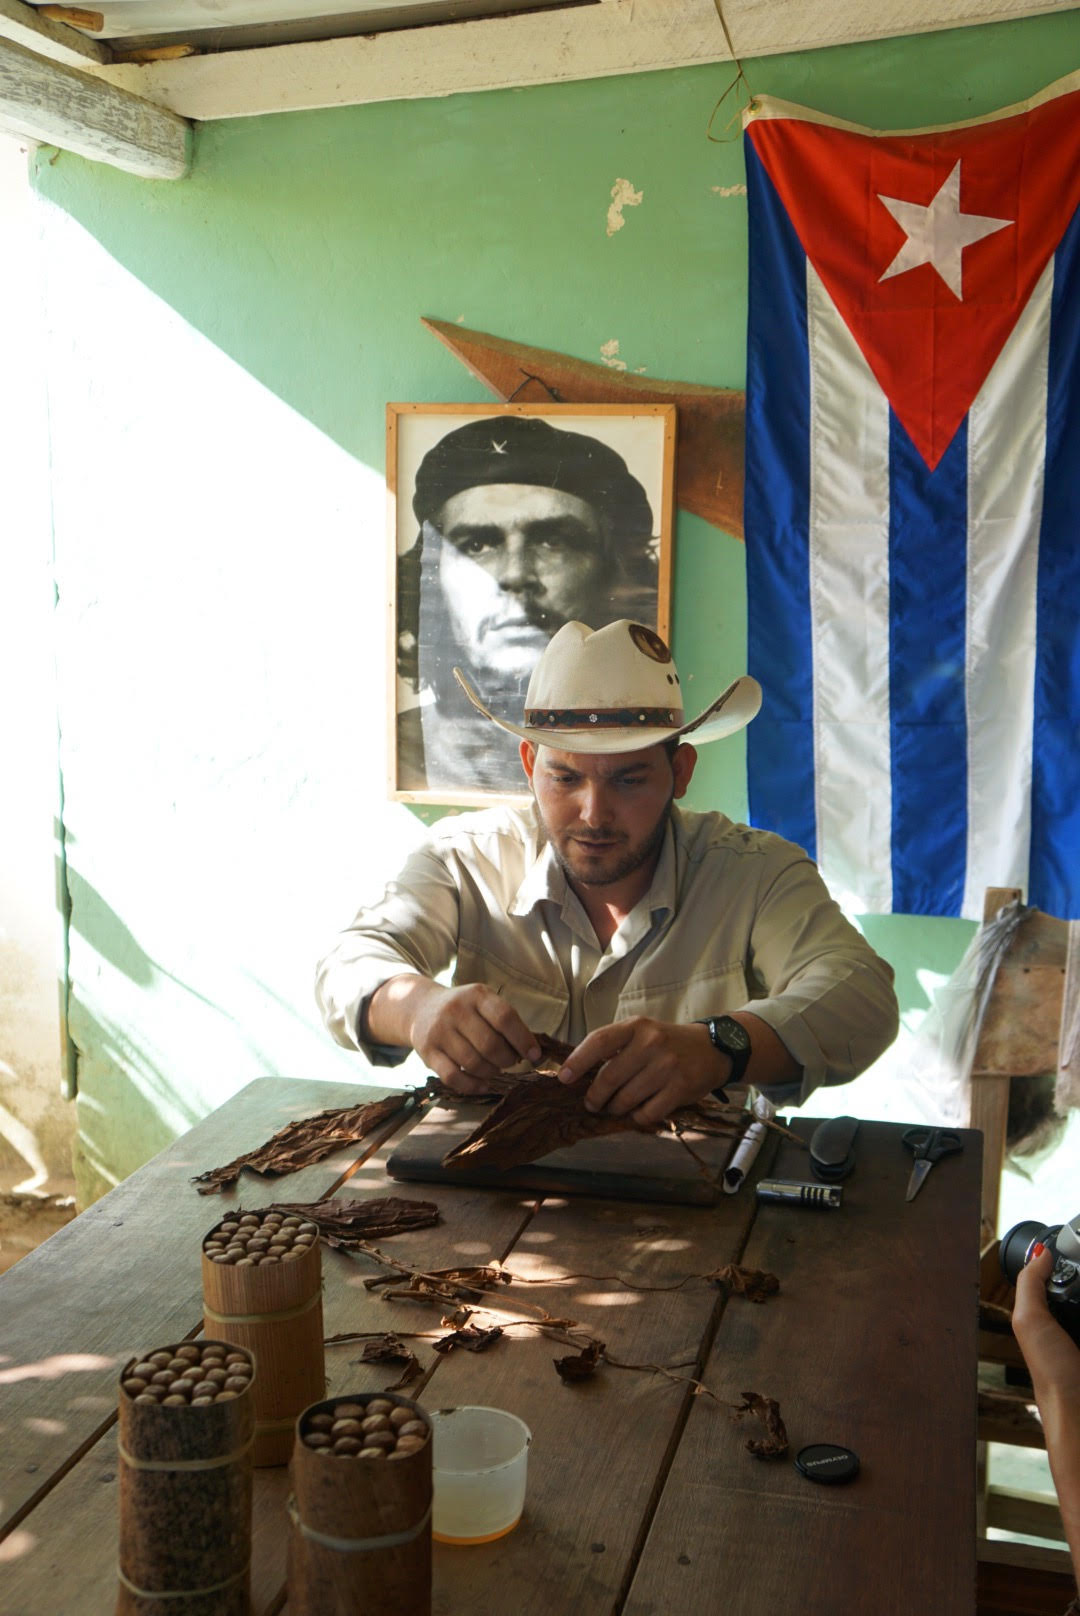 Roll a Cuban cigar in Valle del Silencio